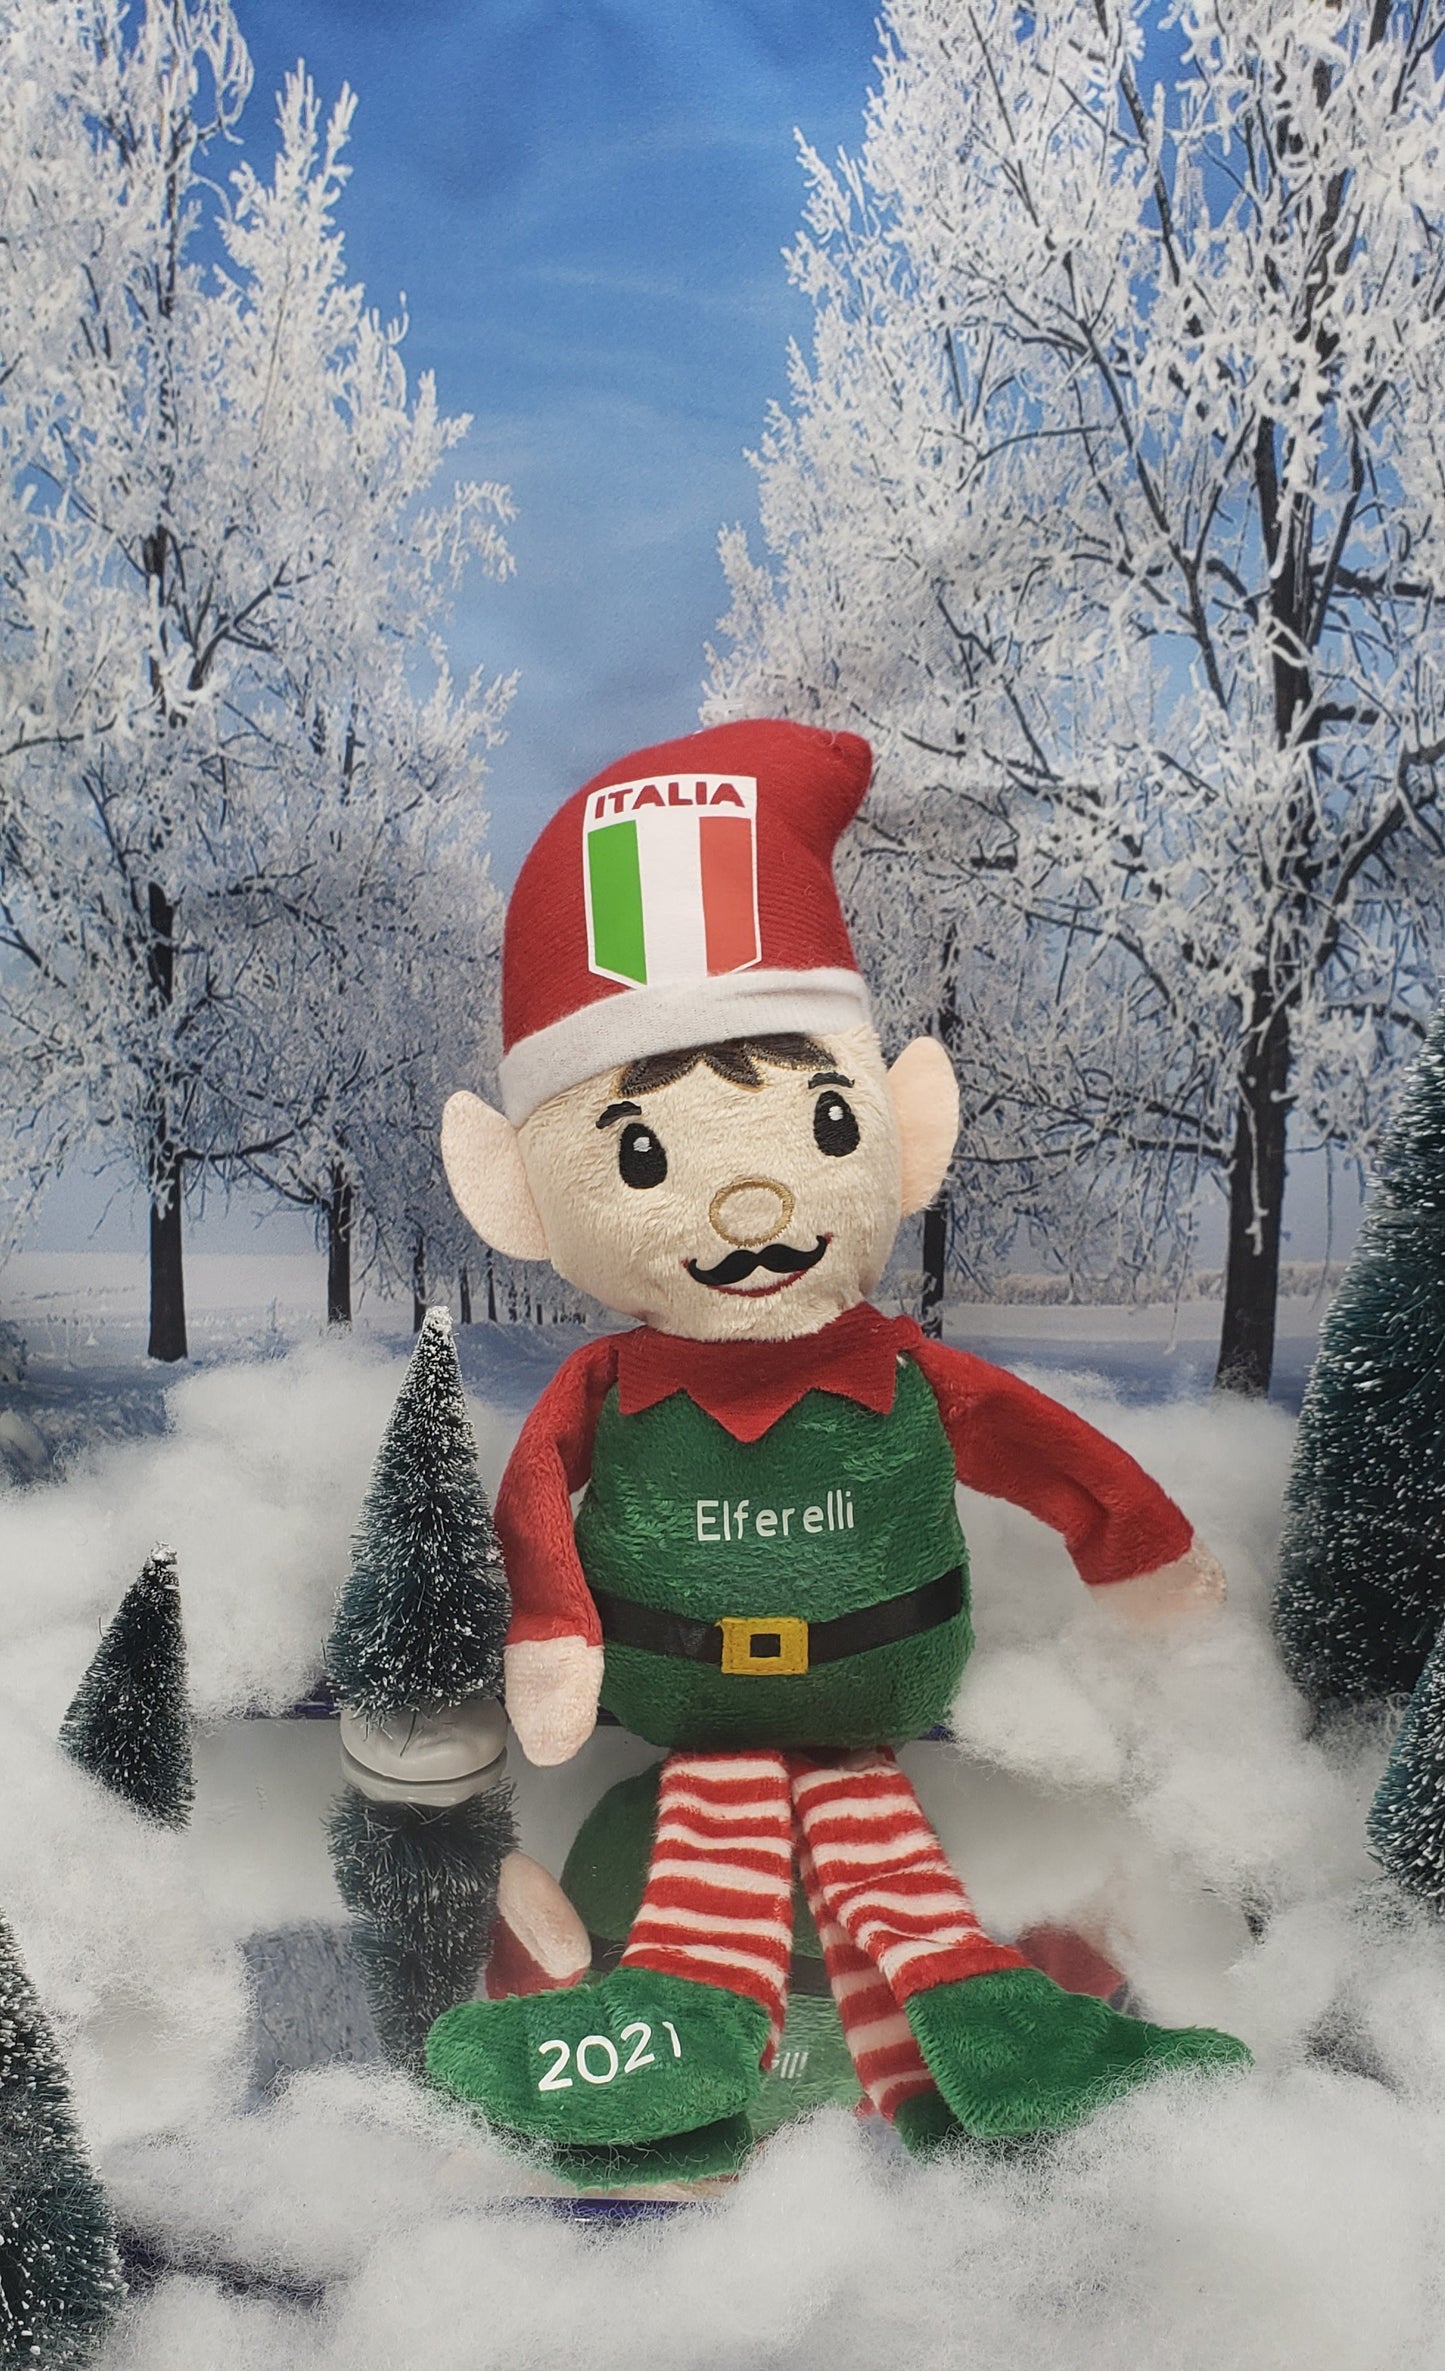 elferelli-the-italian-elf